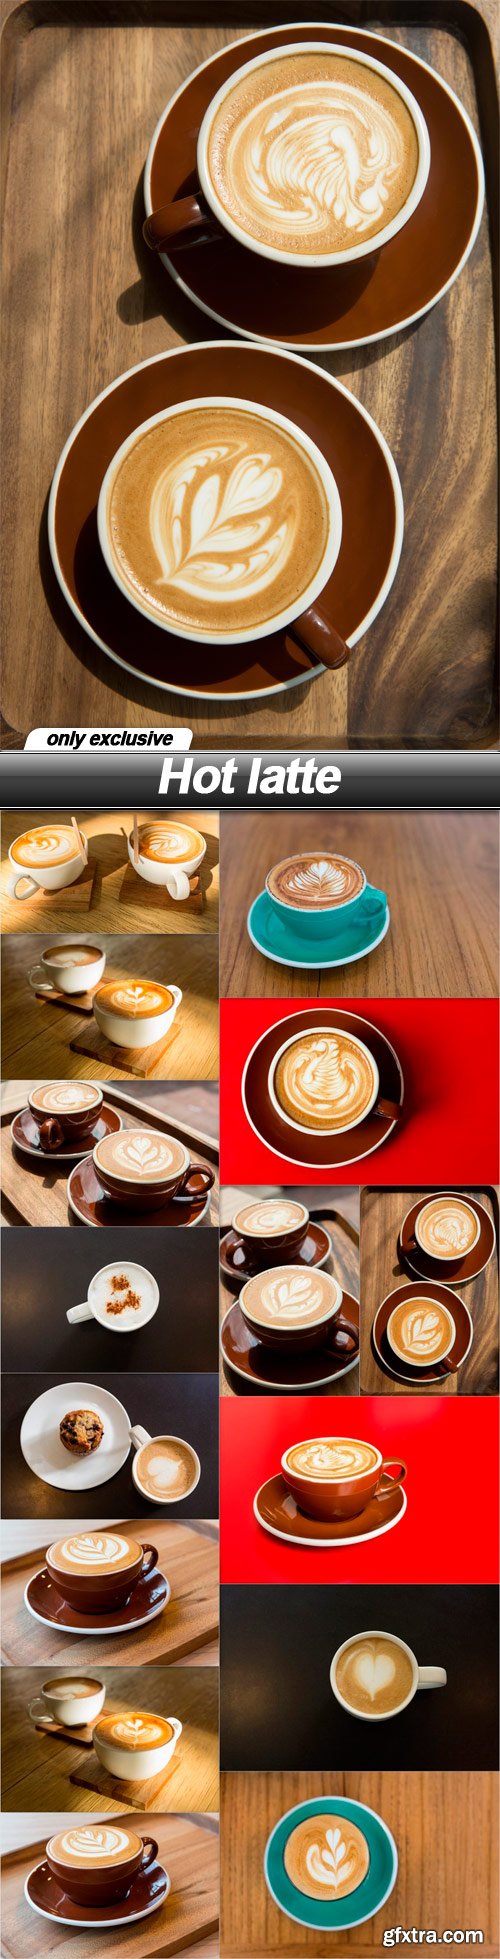 Hot latte - 15 UHQ JPEG